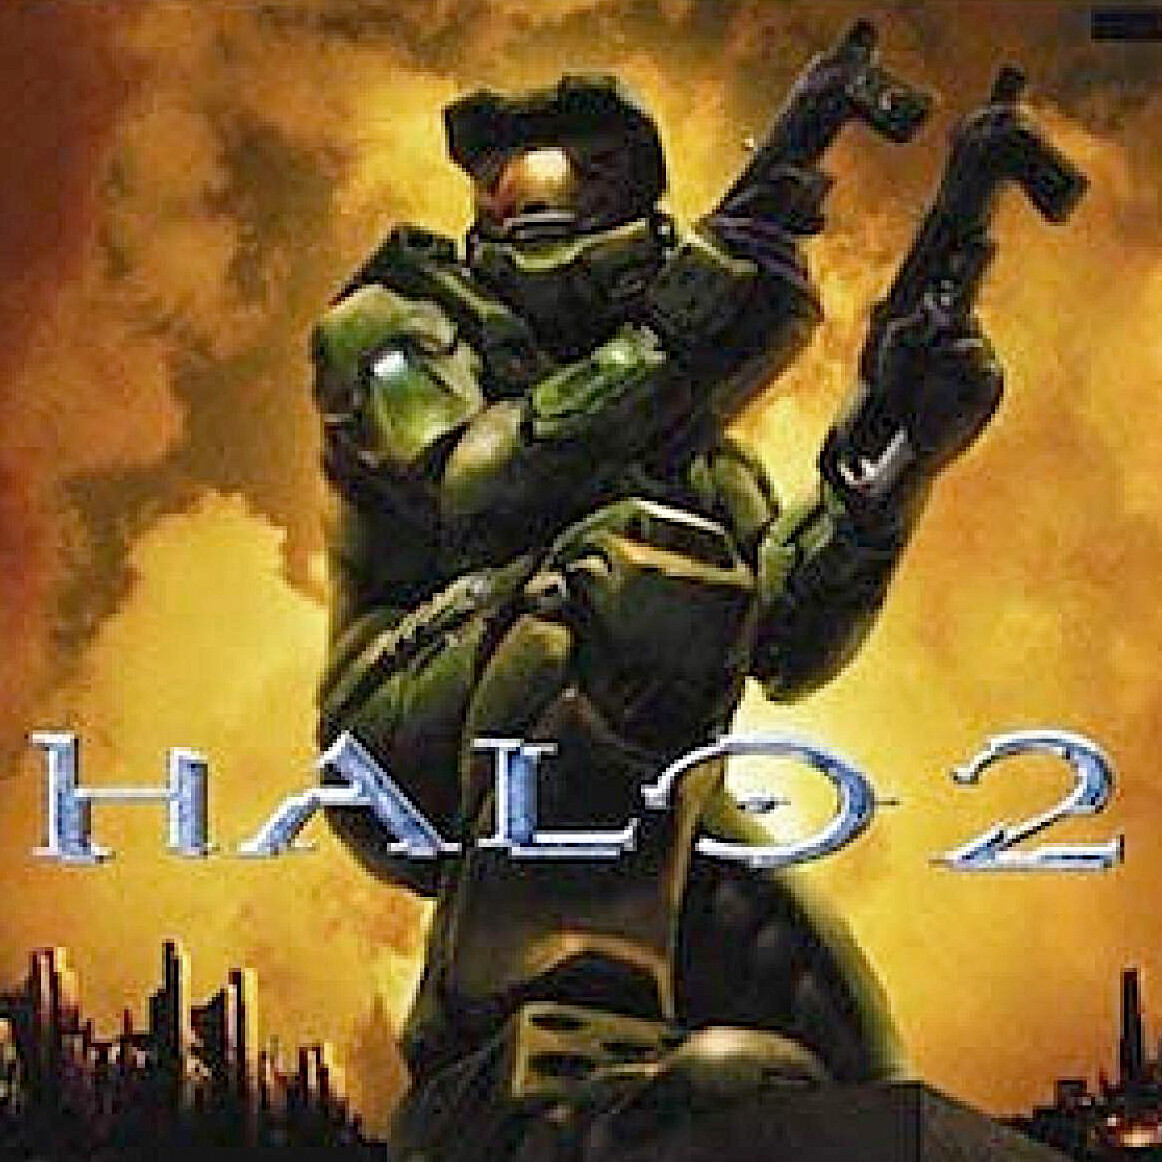 Halo 2 (original and remaster + MCC)